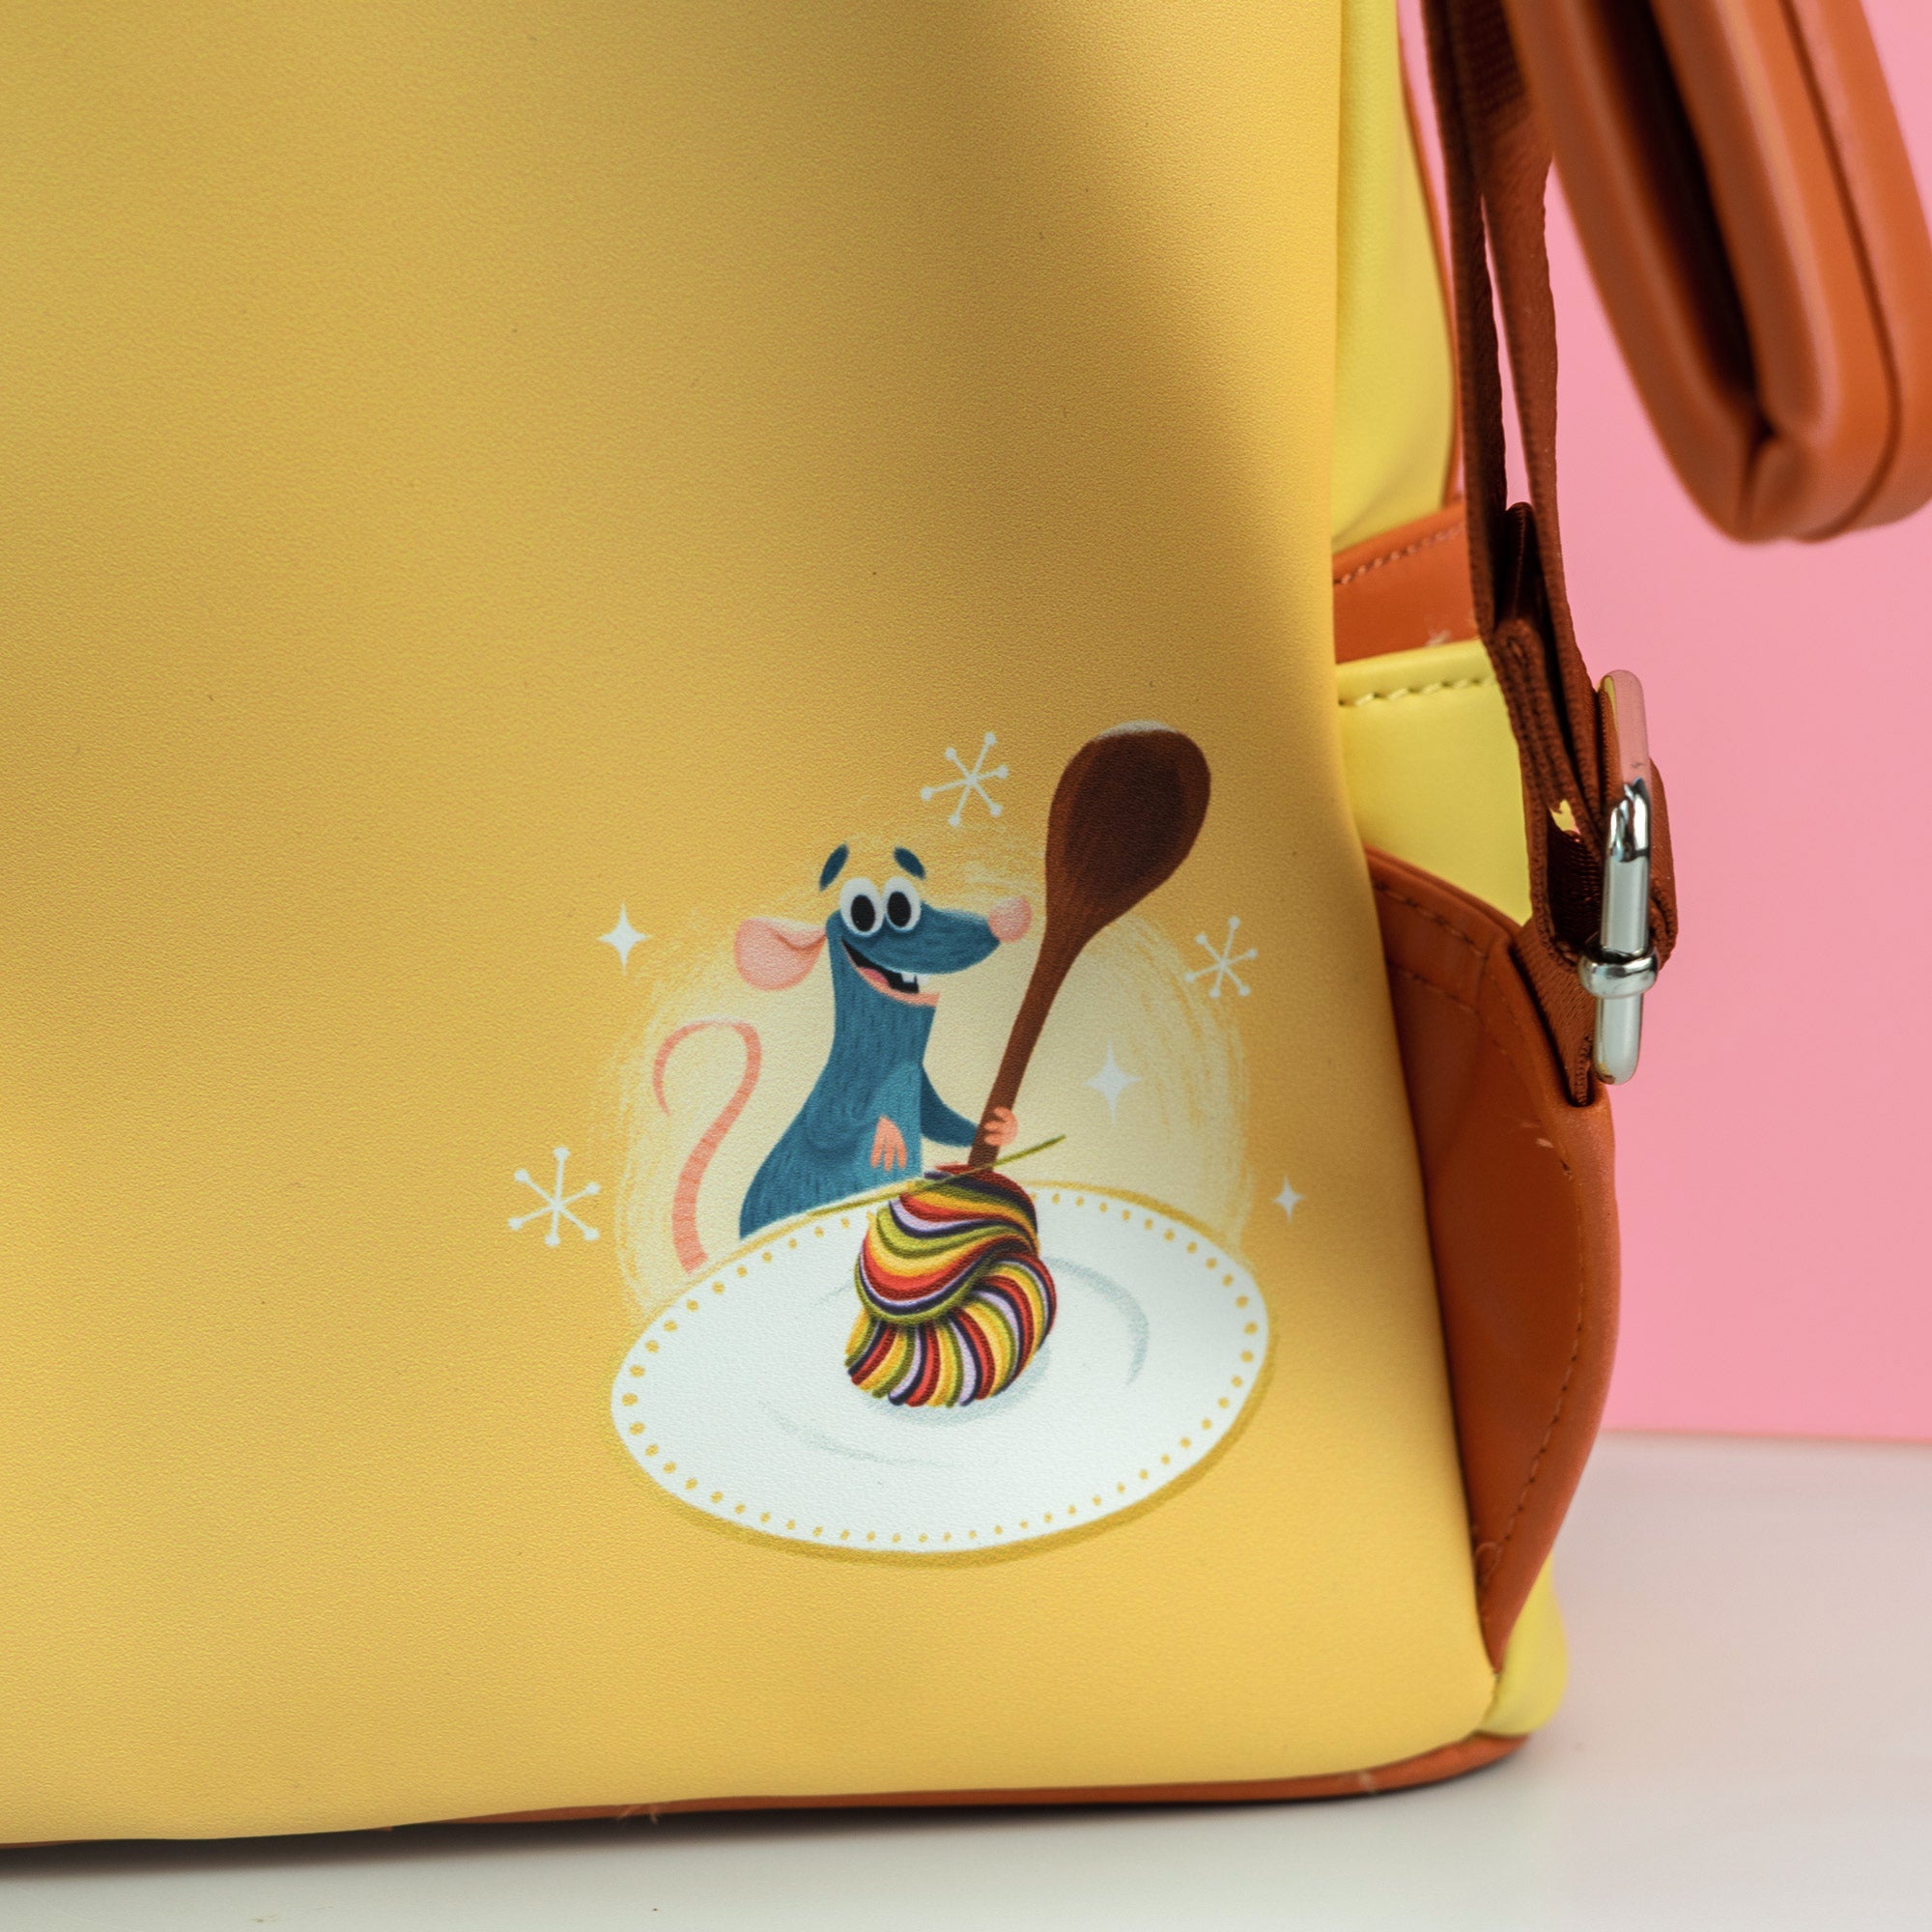 Loungefly x Disney Pixar Ratatouille Cooking Pot Mini Backpack - GeekCore